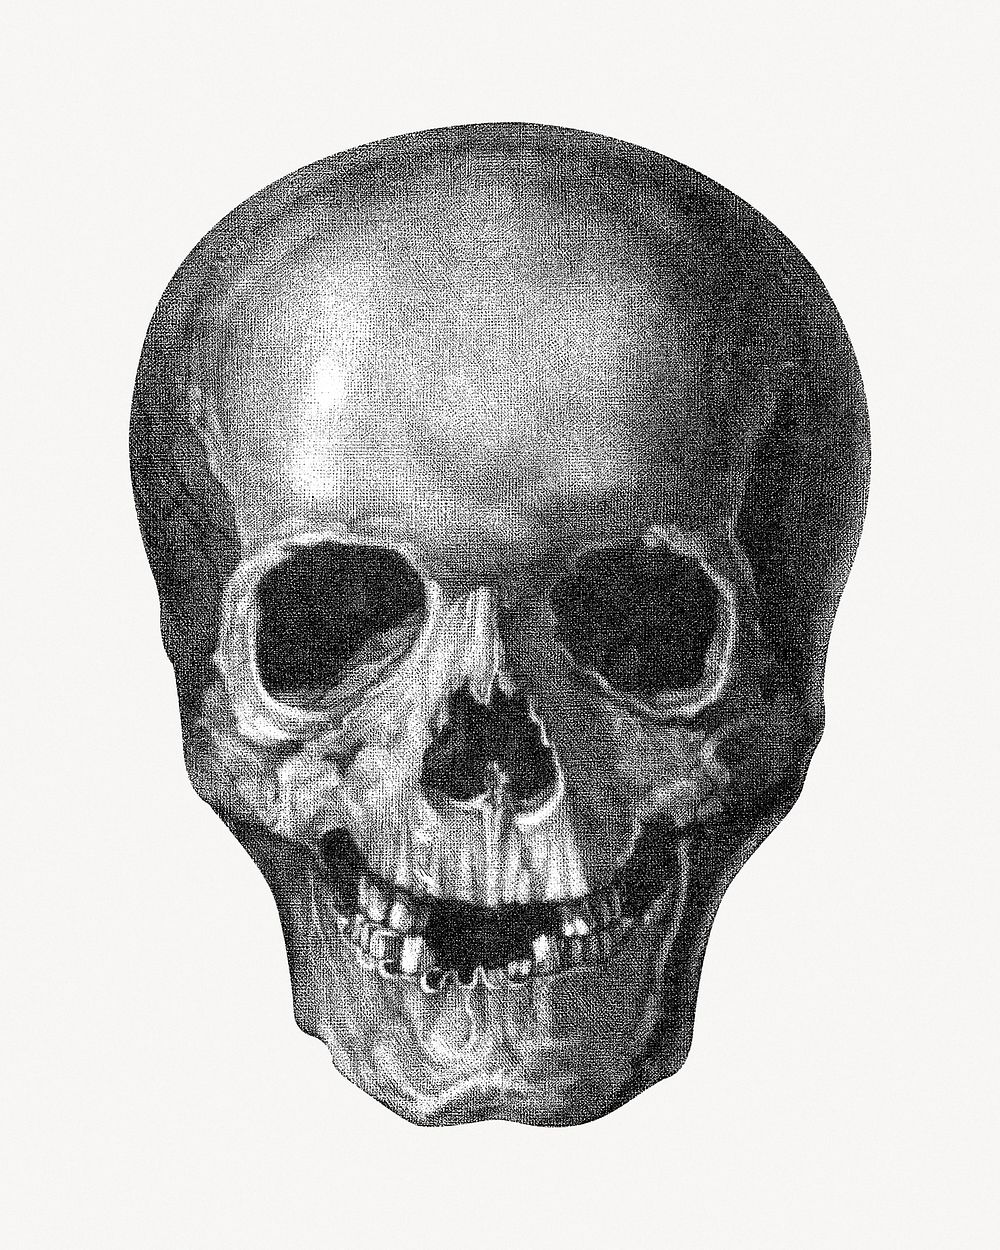 Human skull, vintage illustration.   Remastered by rawpixel